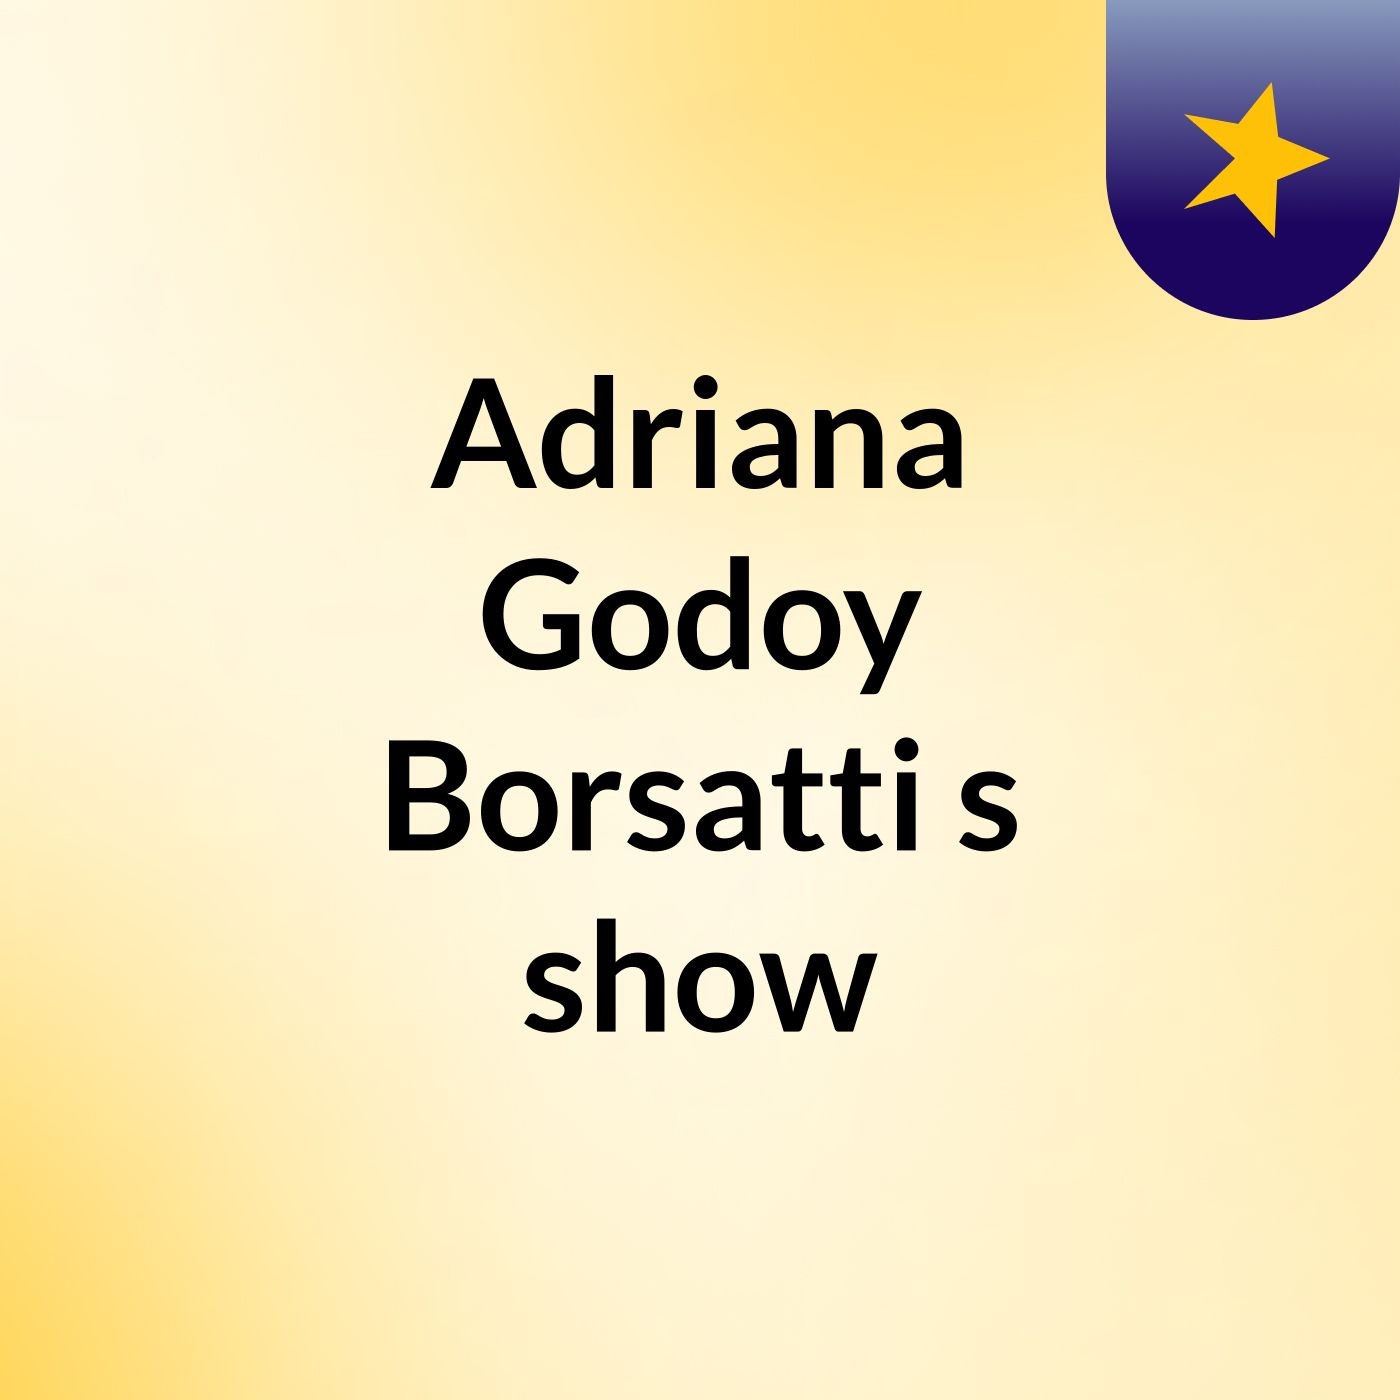 Adriana Godoy Borsatti's show